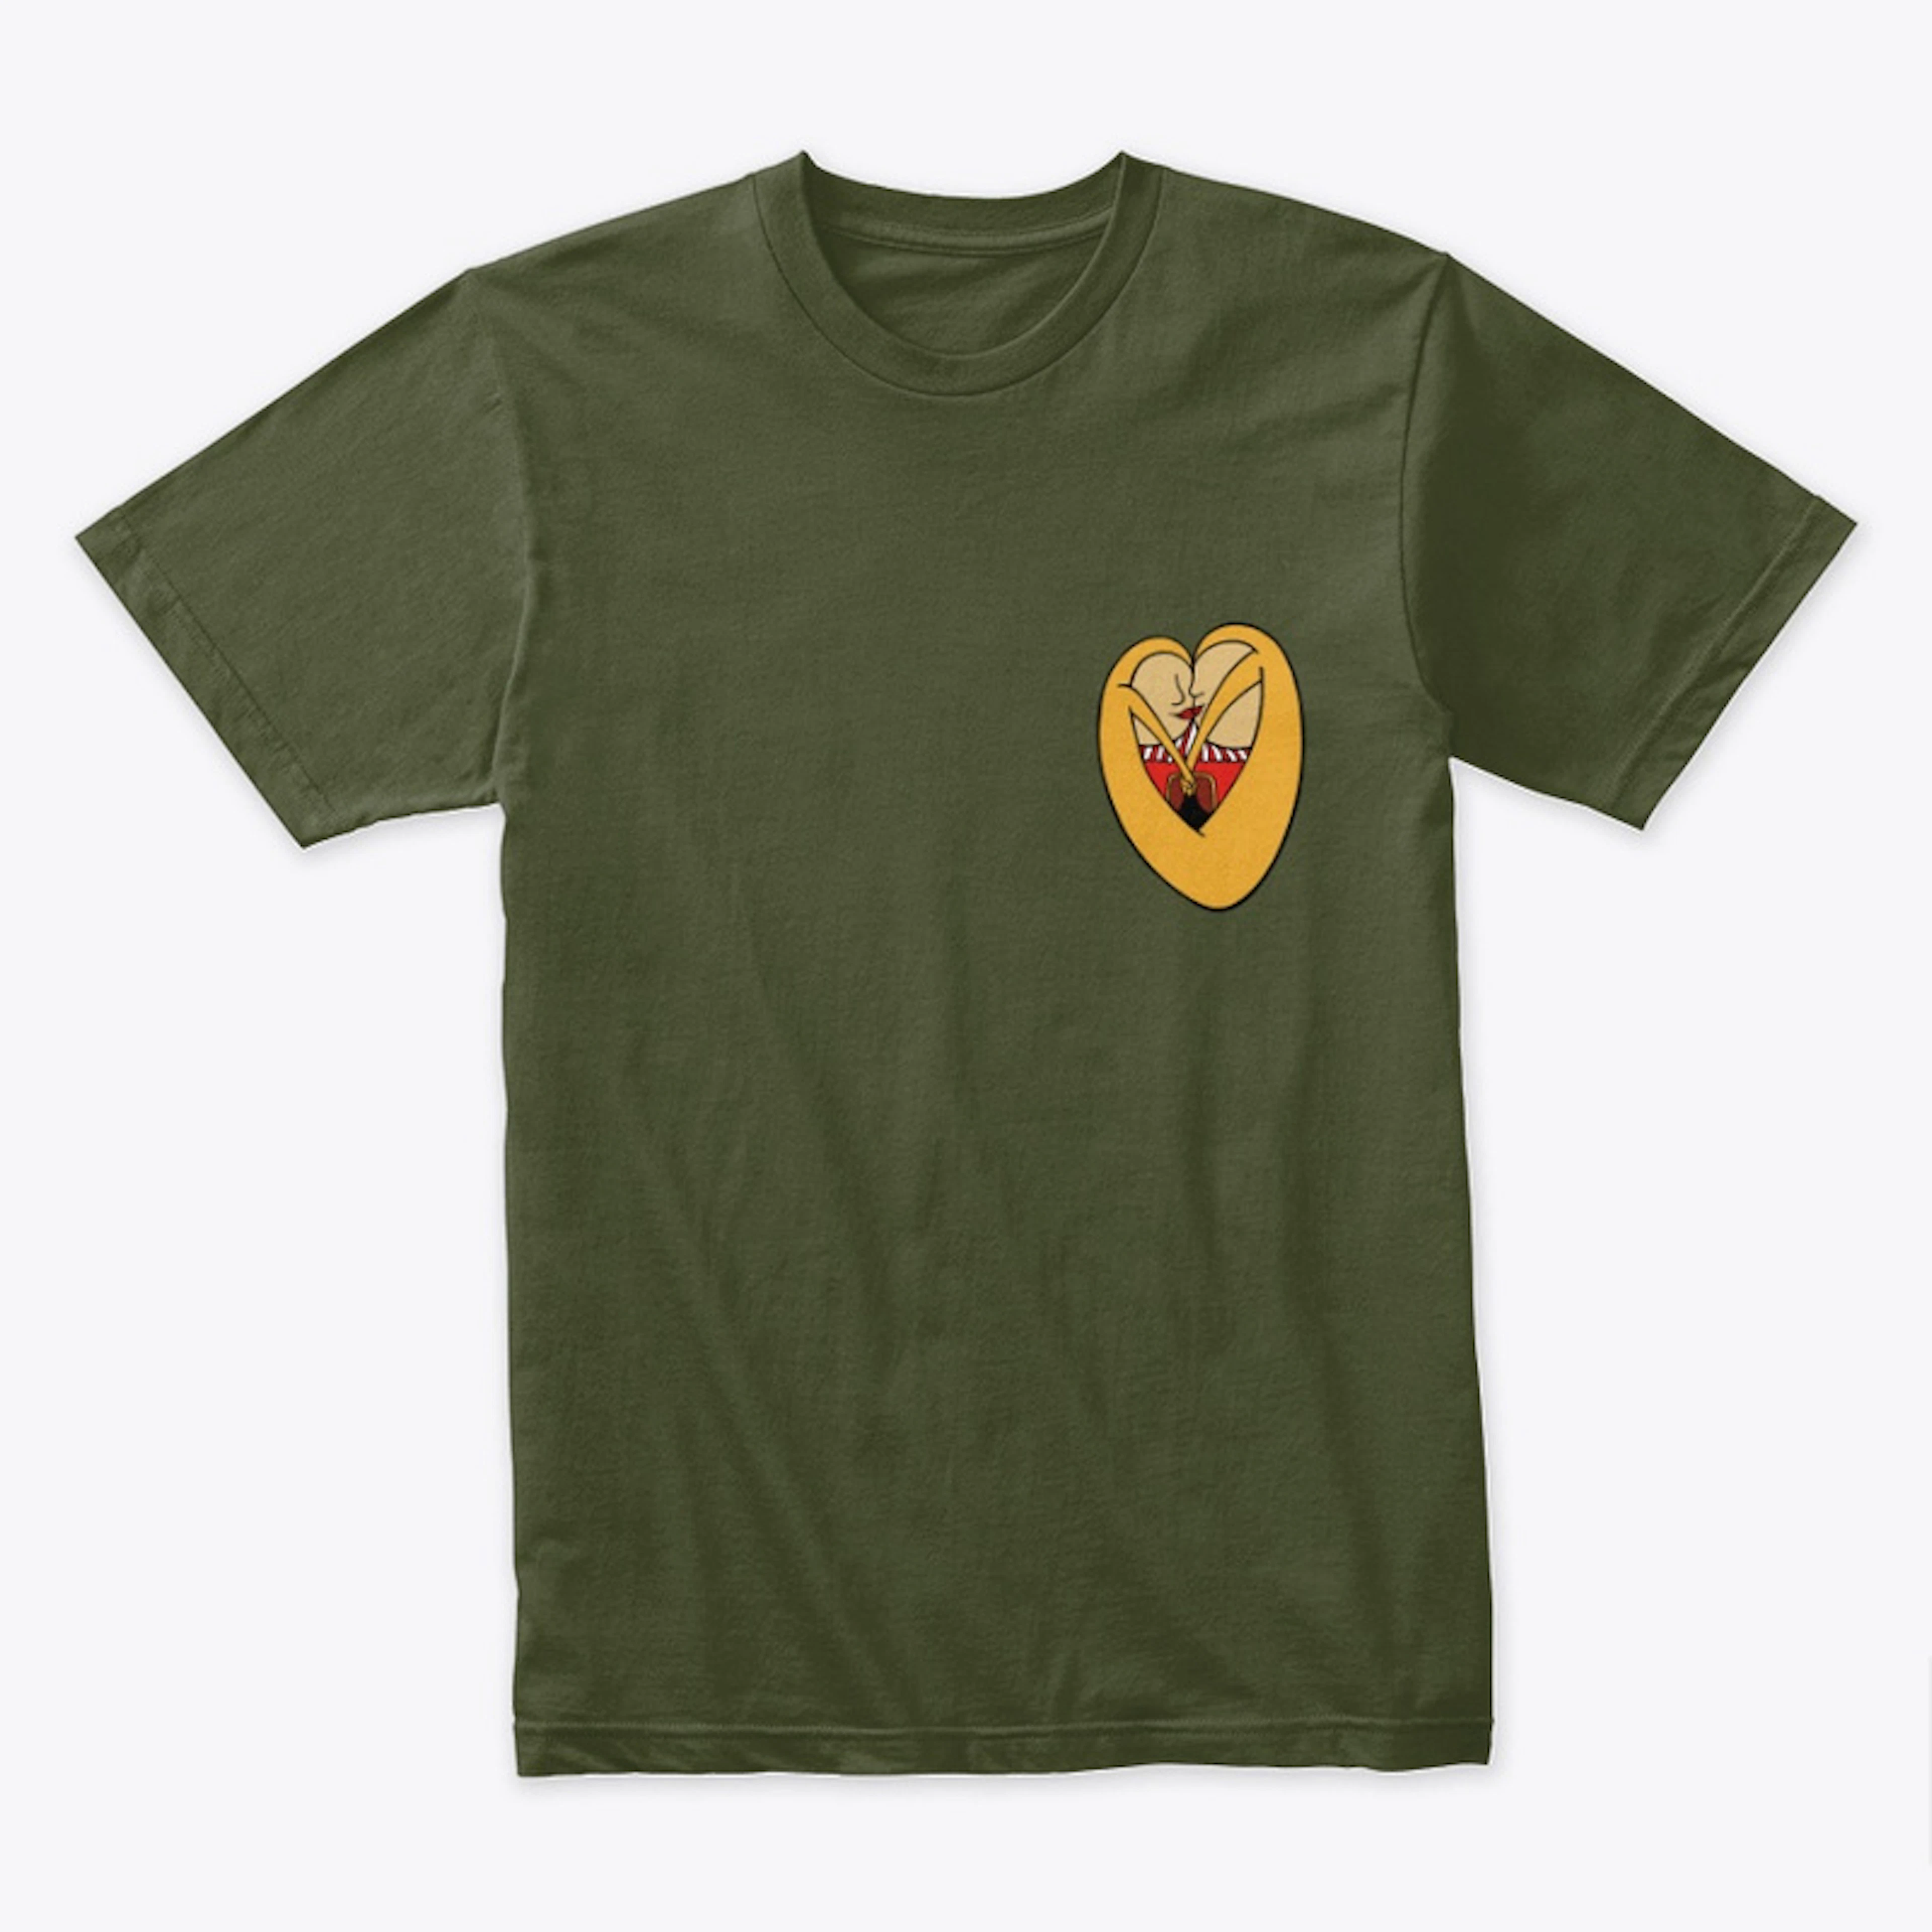 Agape Love T-shirt for sale